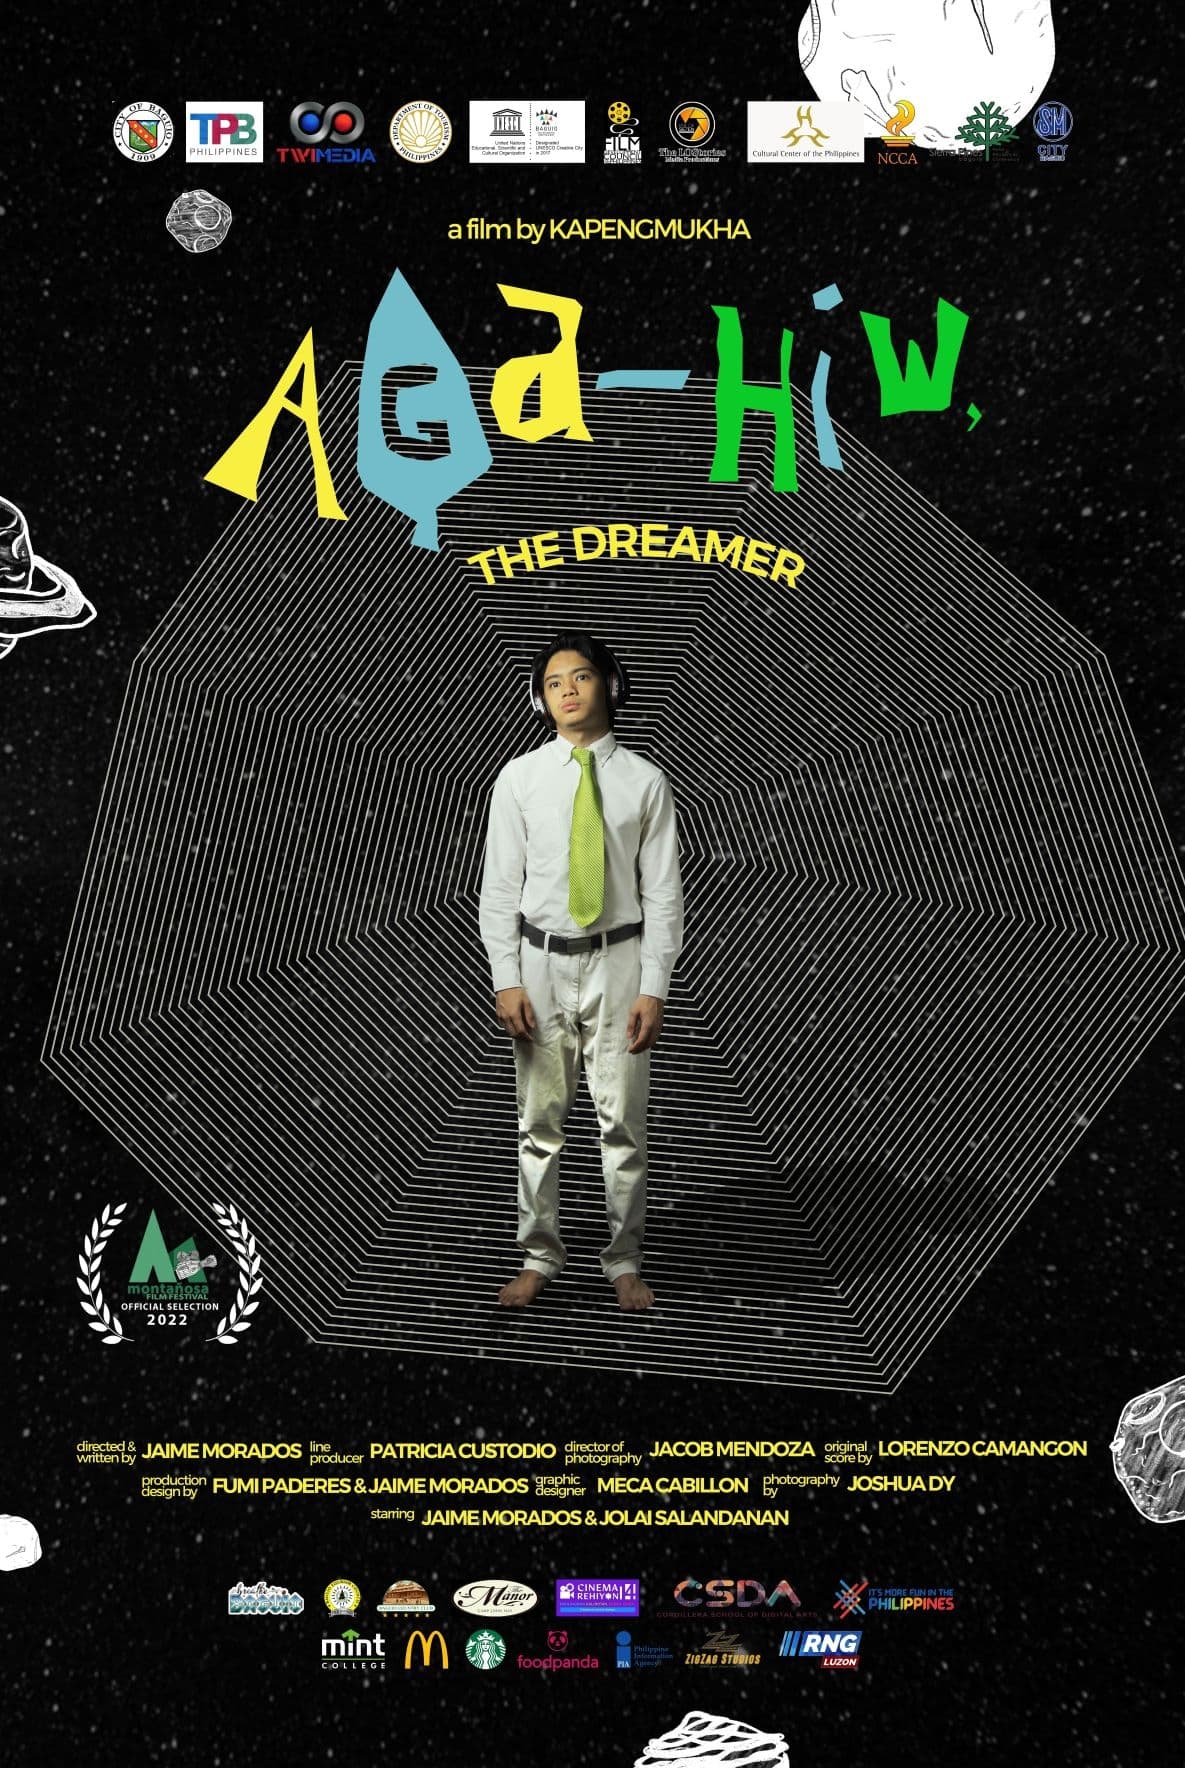 Aga-Hiw, The Dreamer